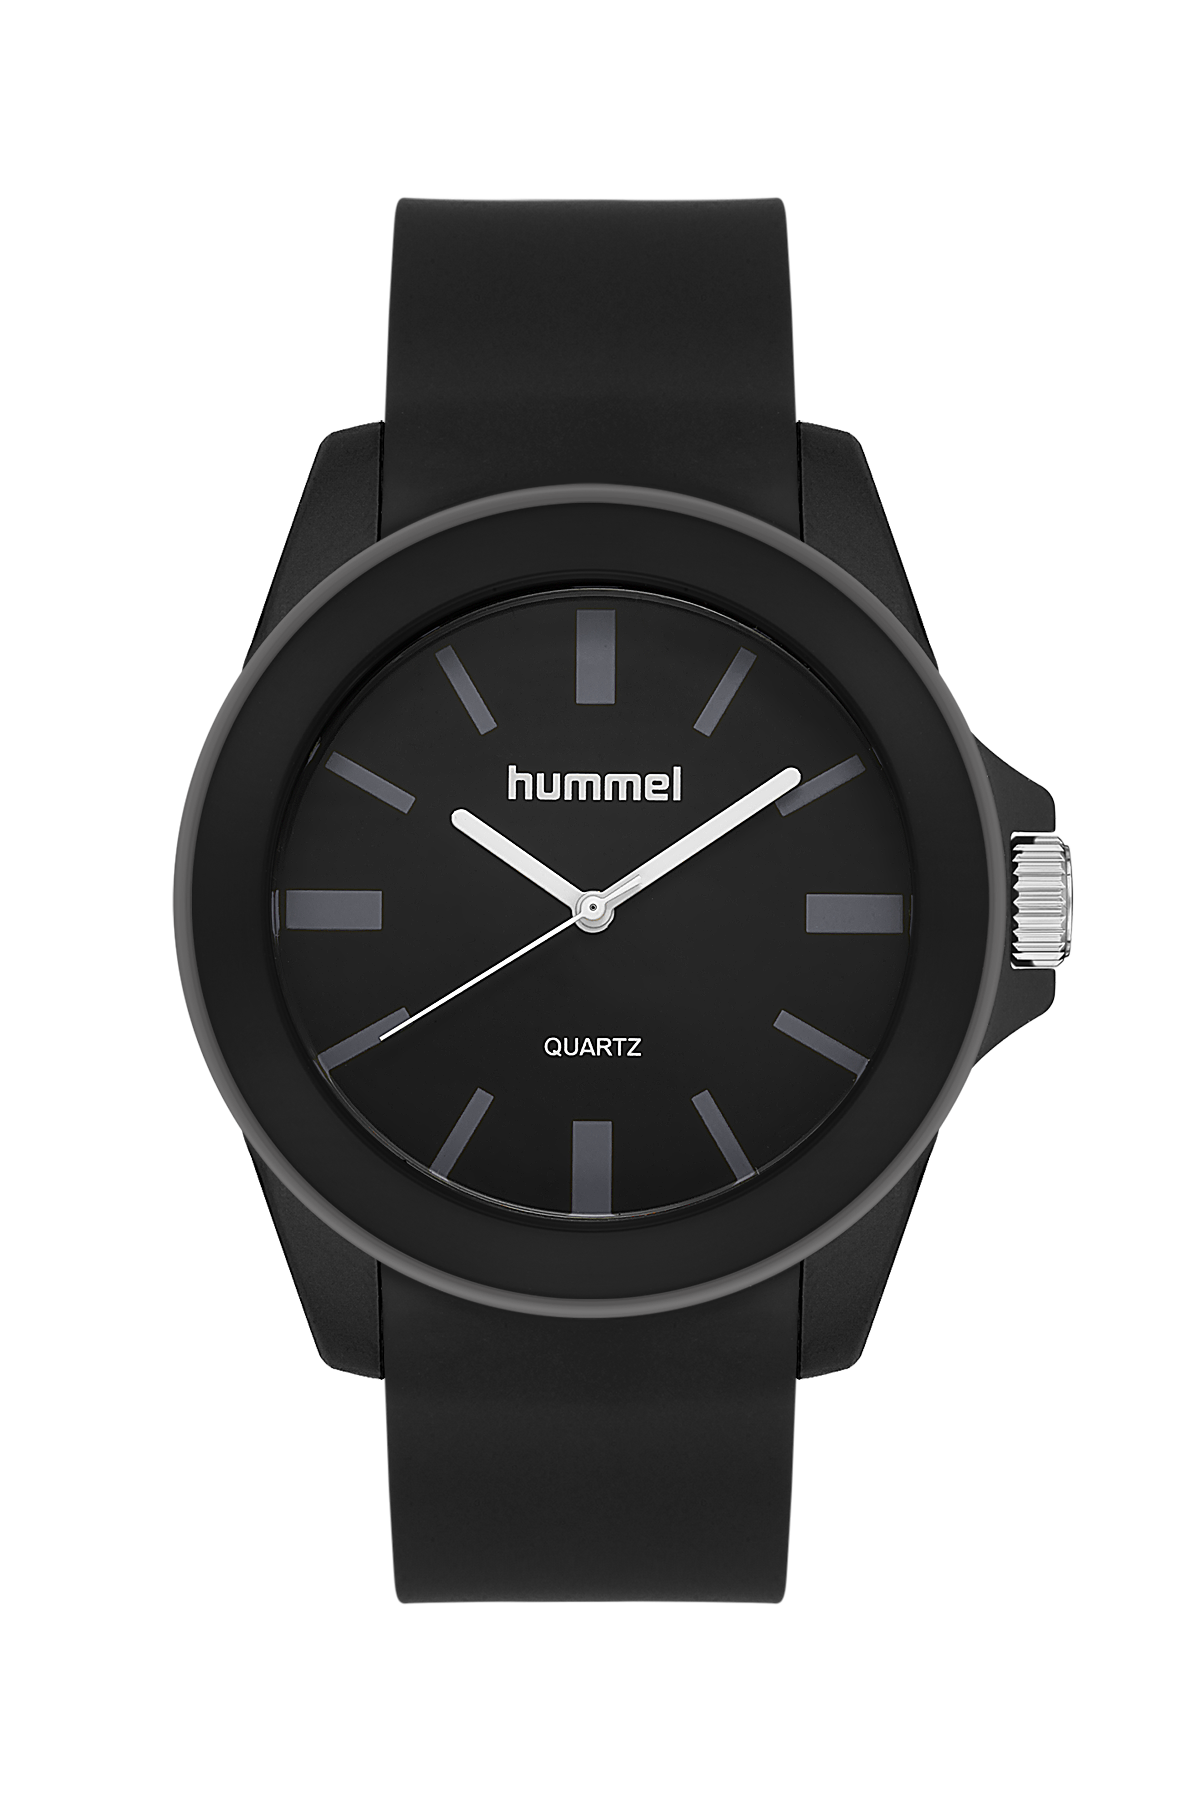 HUMMEL HM-1004MA-1